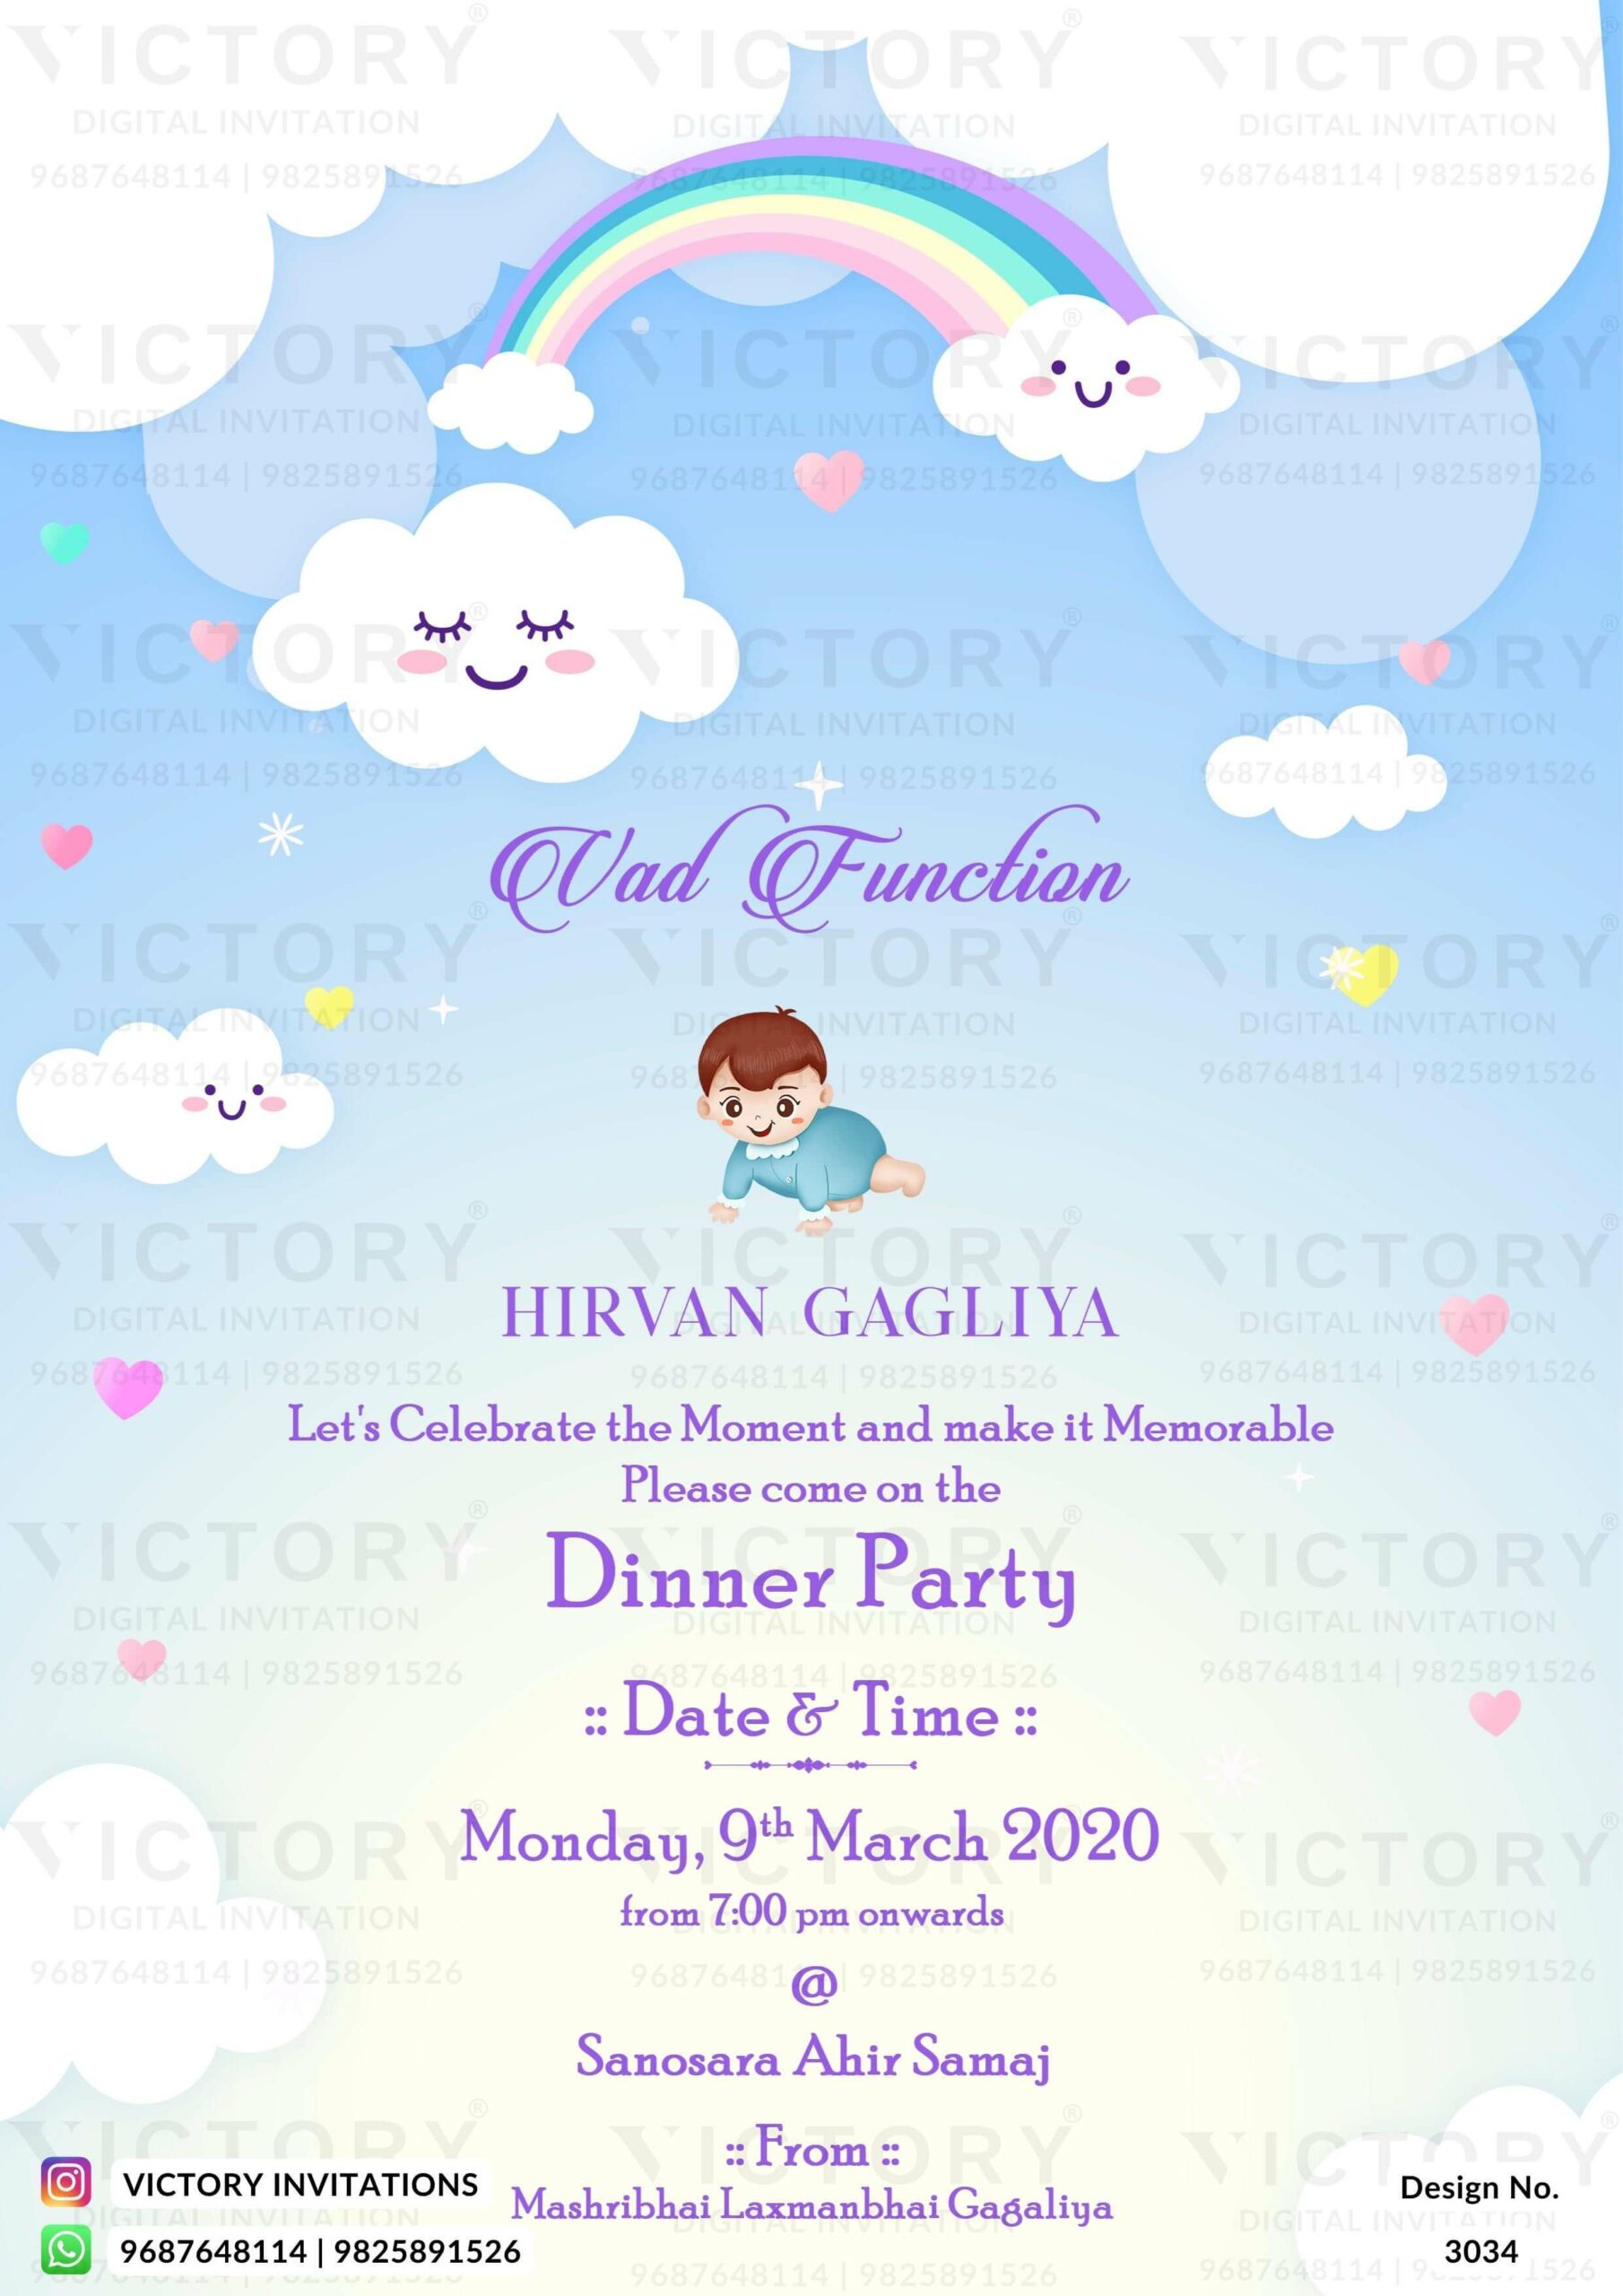 Vad Function ceremony digital invitation card design no.3034